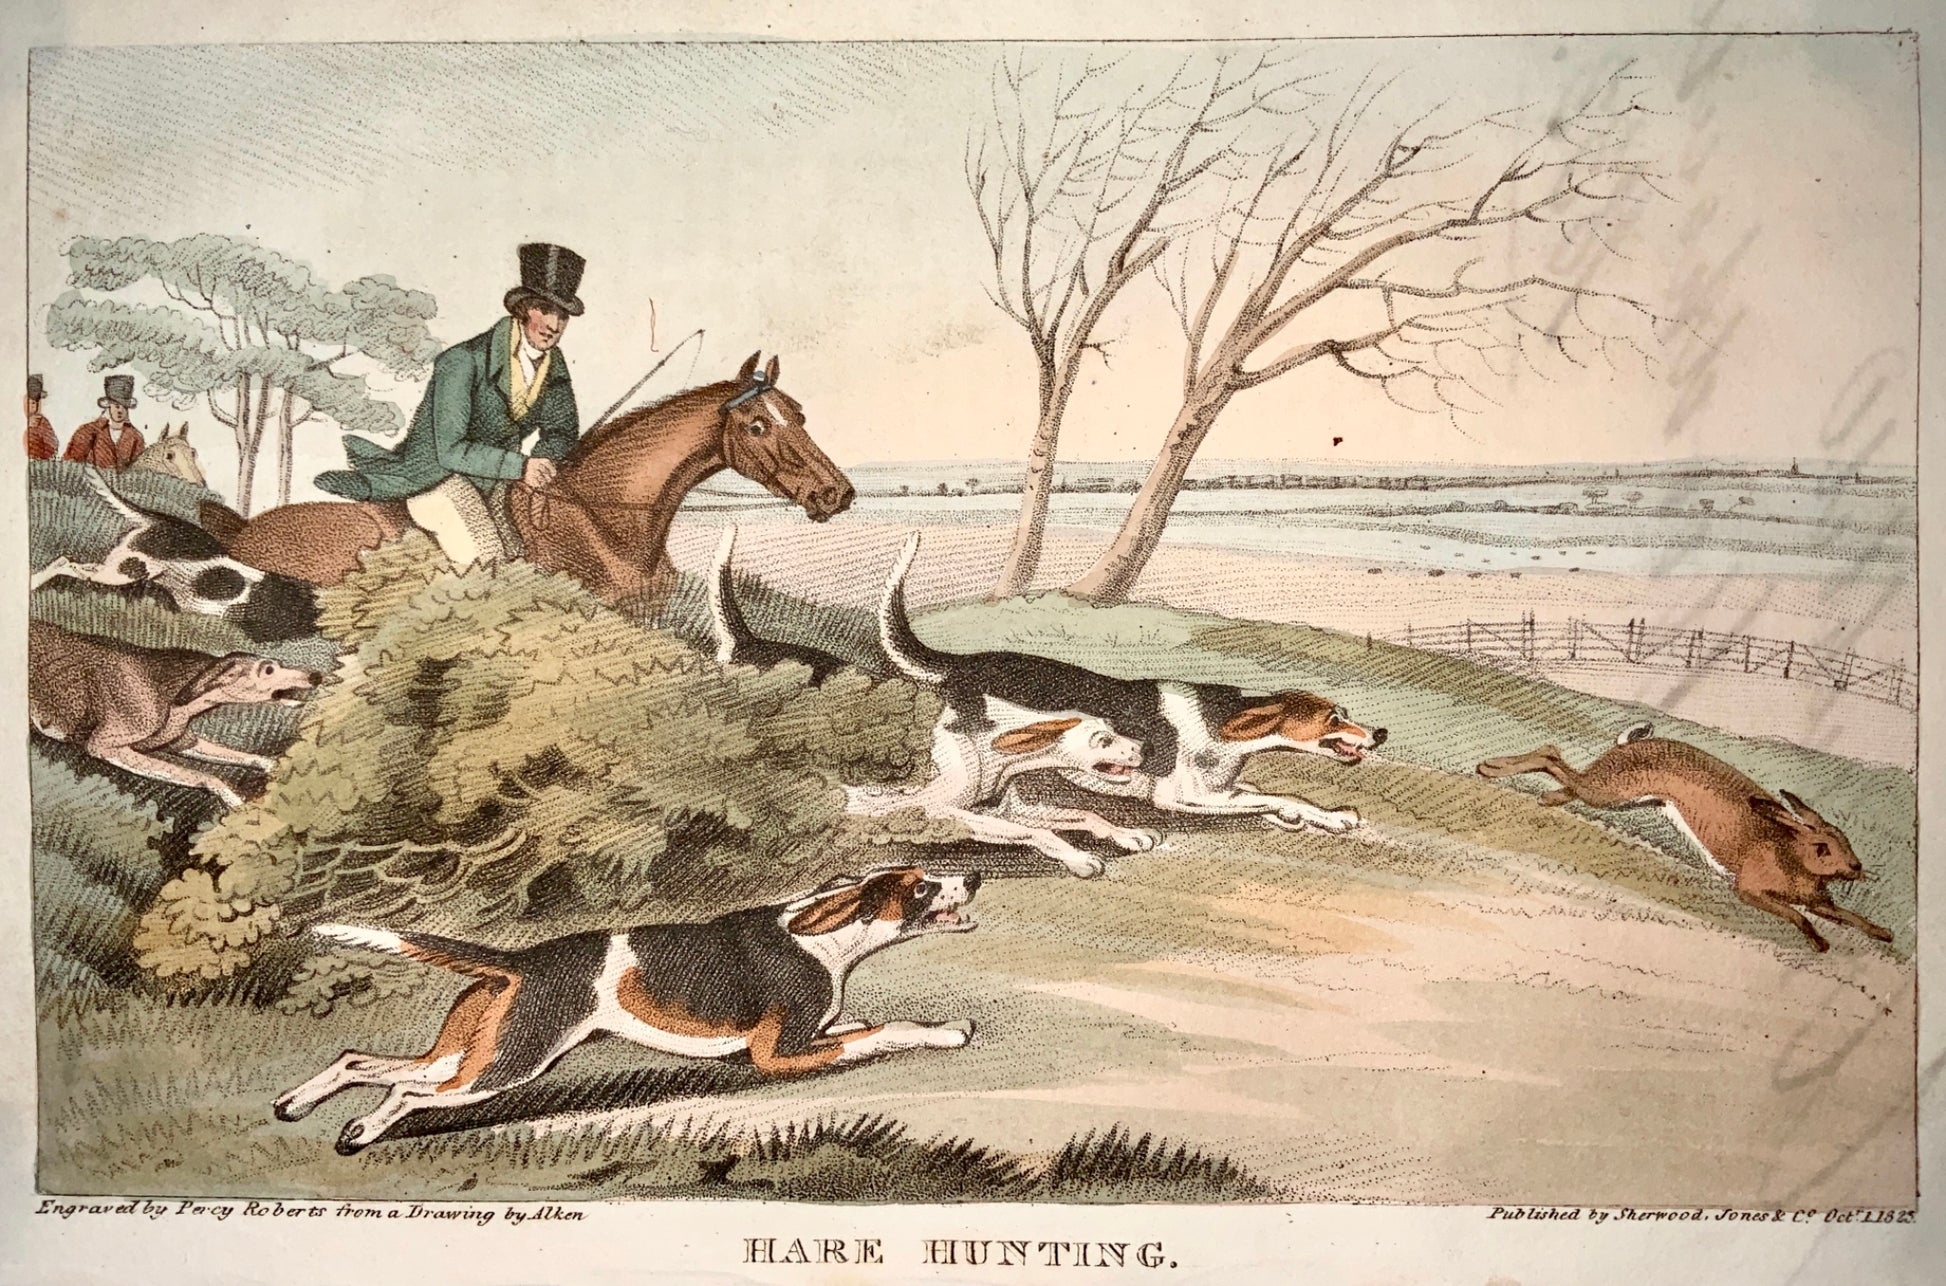 1823 Sherwood after Alken - HARE HUNTING - hand coloured aquatint